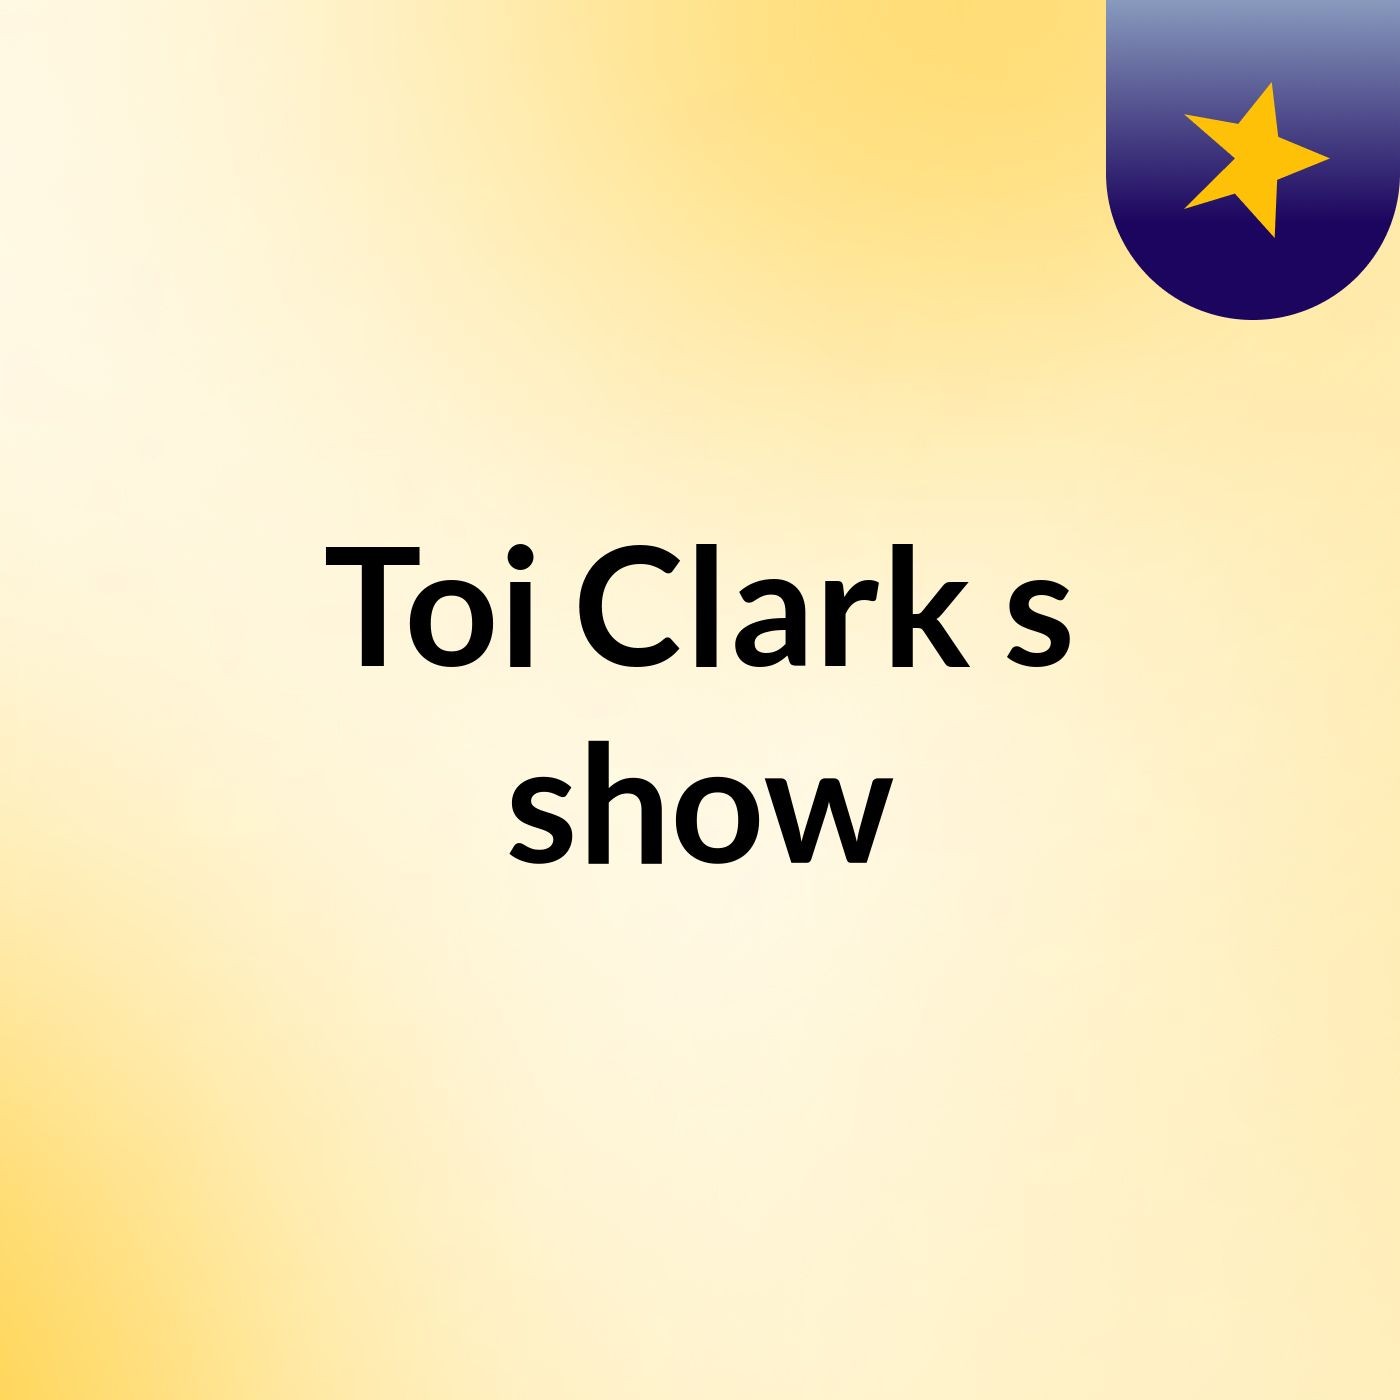 Toi Clark's show